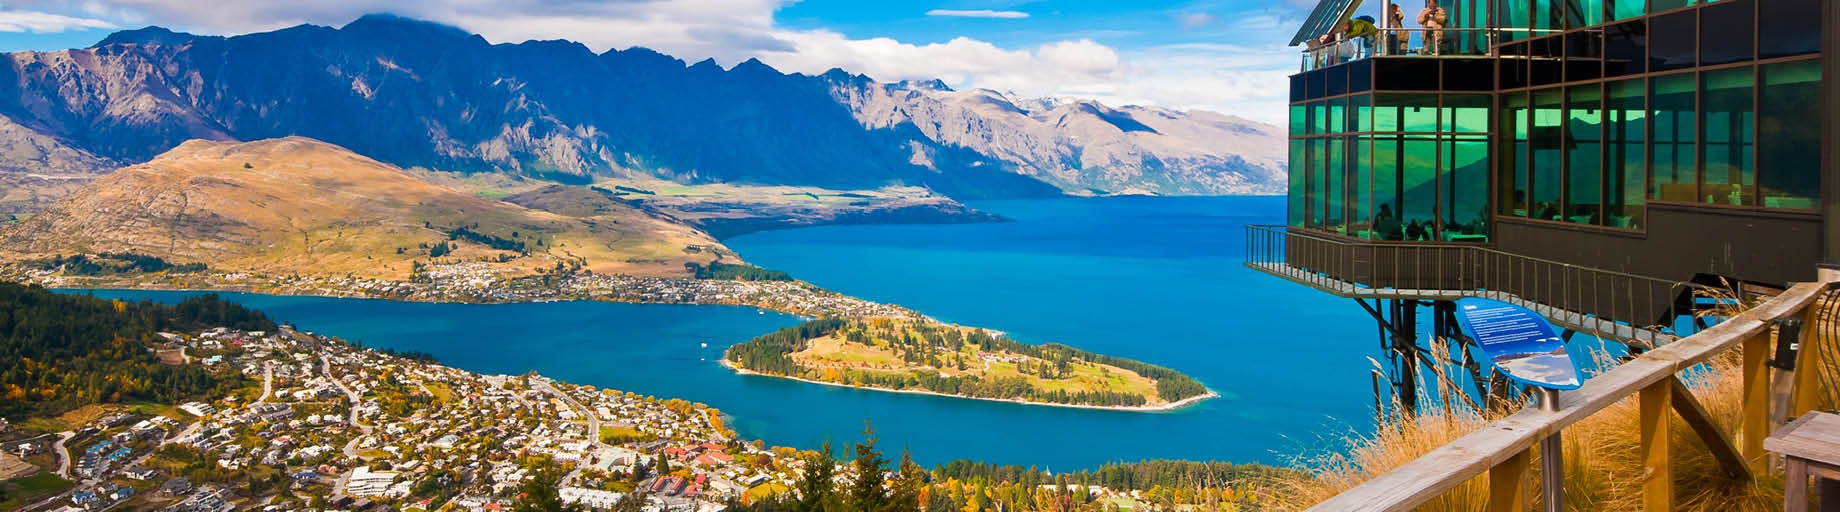 Queenstown, Lake Tekapo and Wanaka, New Zealand with David Taylor